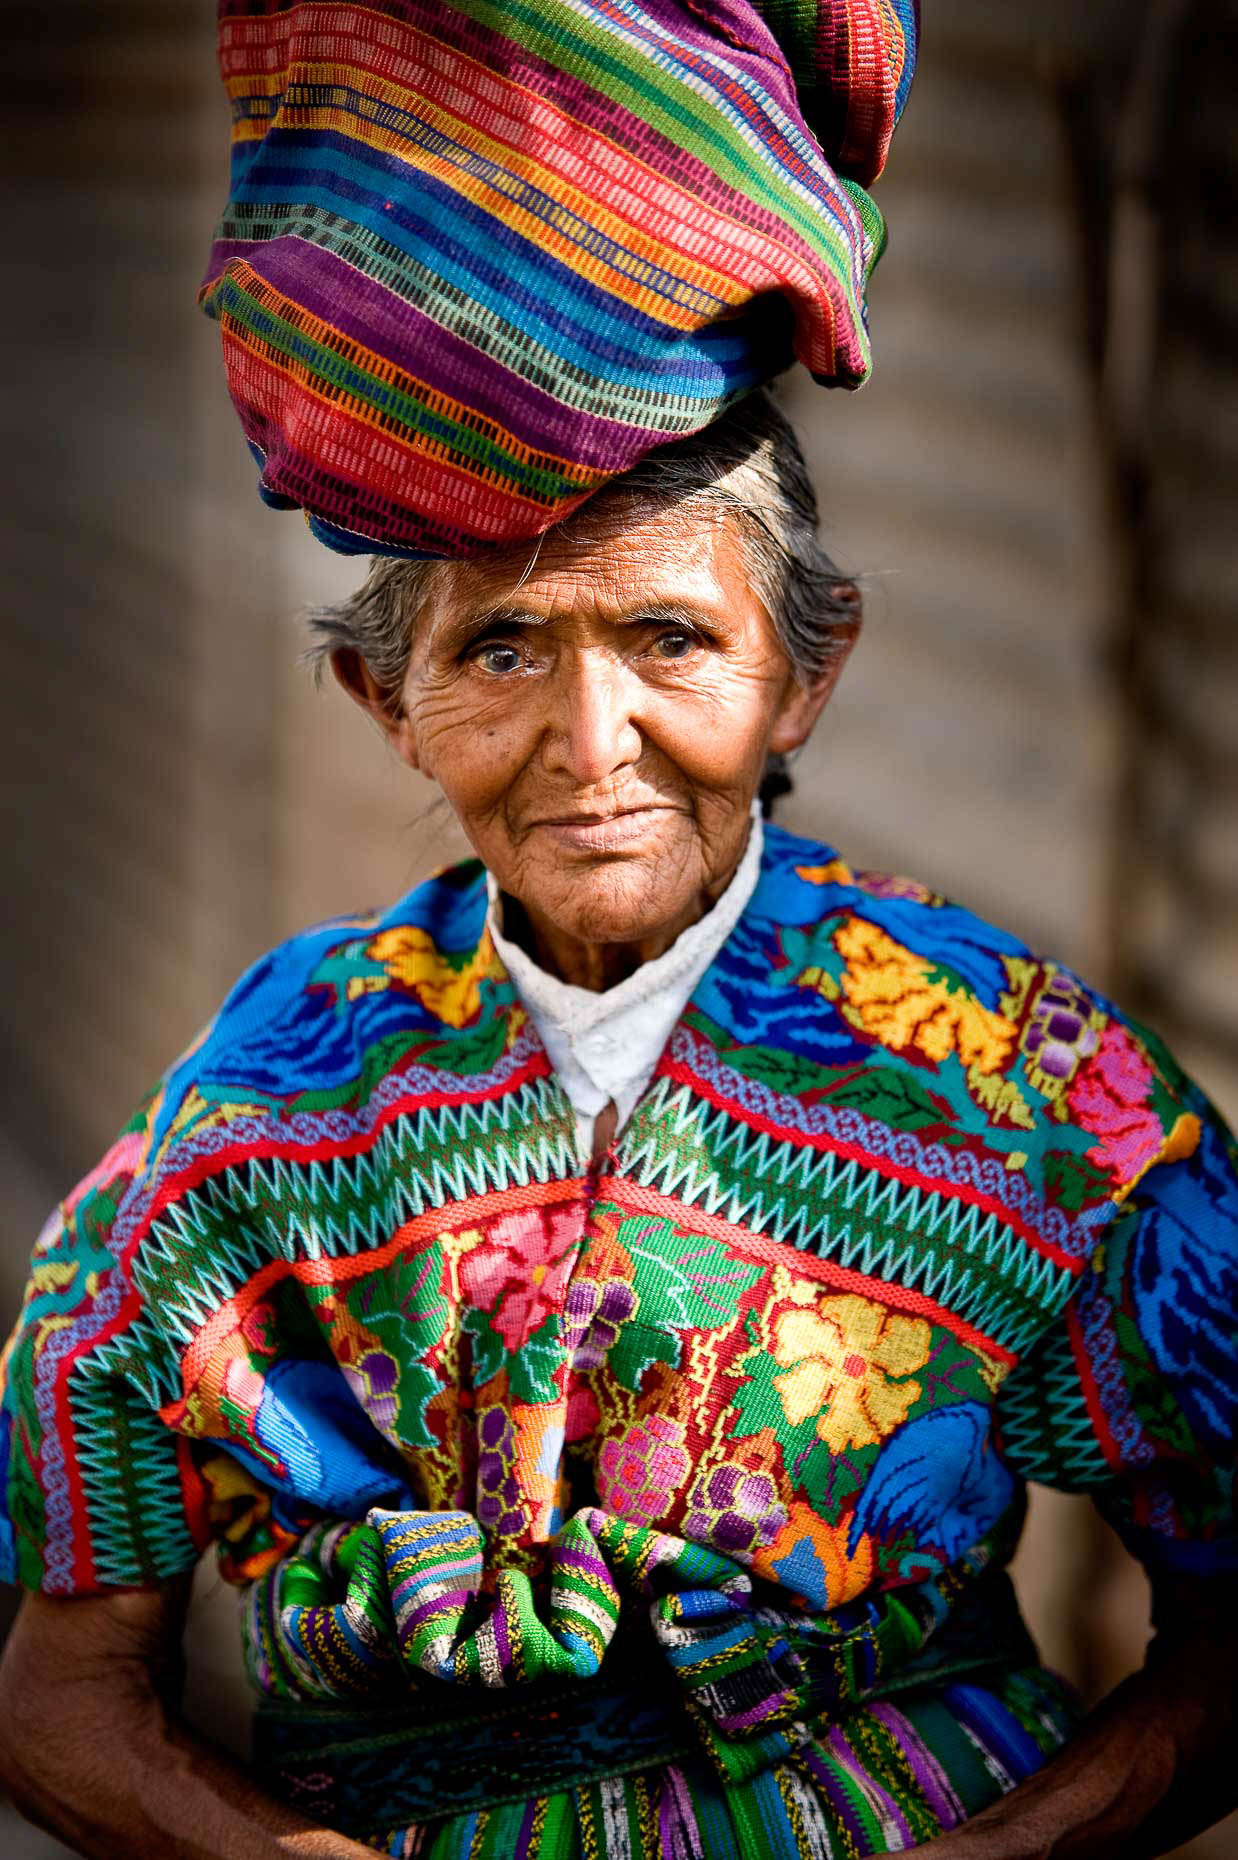 https://2abe47a55cfe3c2aba27-1868d38b8806f9b6ecce0a5b84ee61c5.ssl.cf1.rackcdn.com/san-antonio-aguas-calientes-portrait-colour-traditional-dress-antigua-guatemala-central-america.jpg